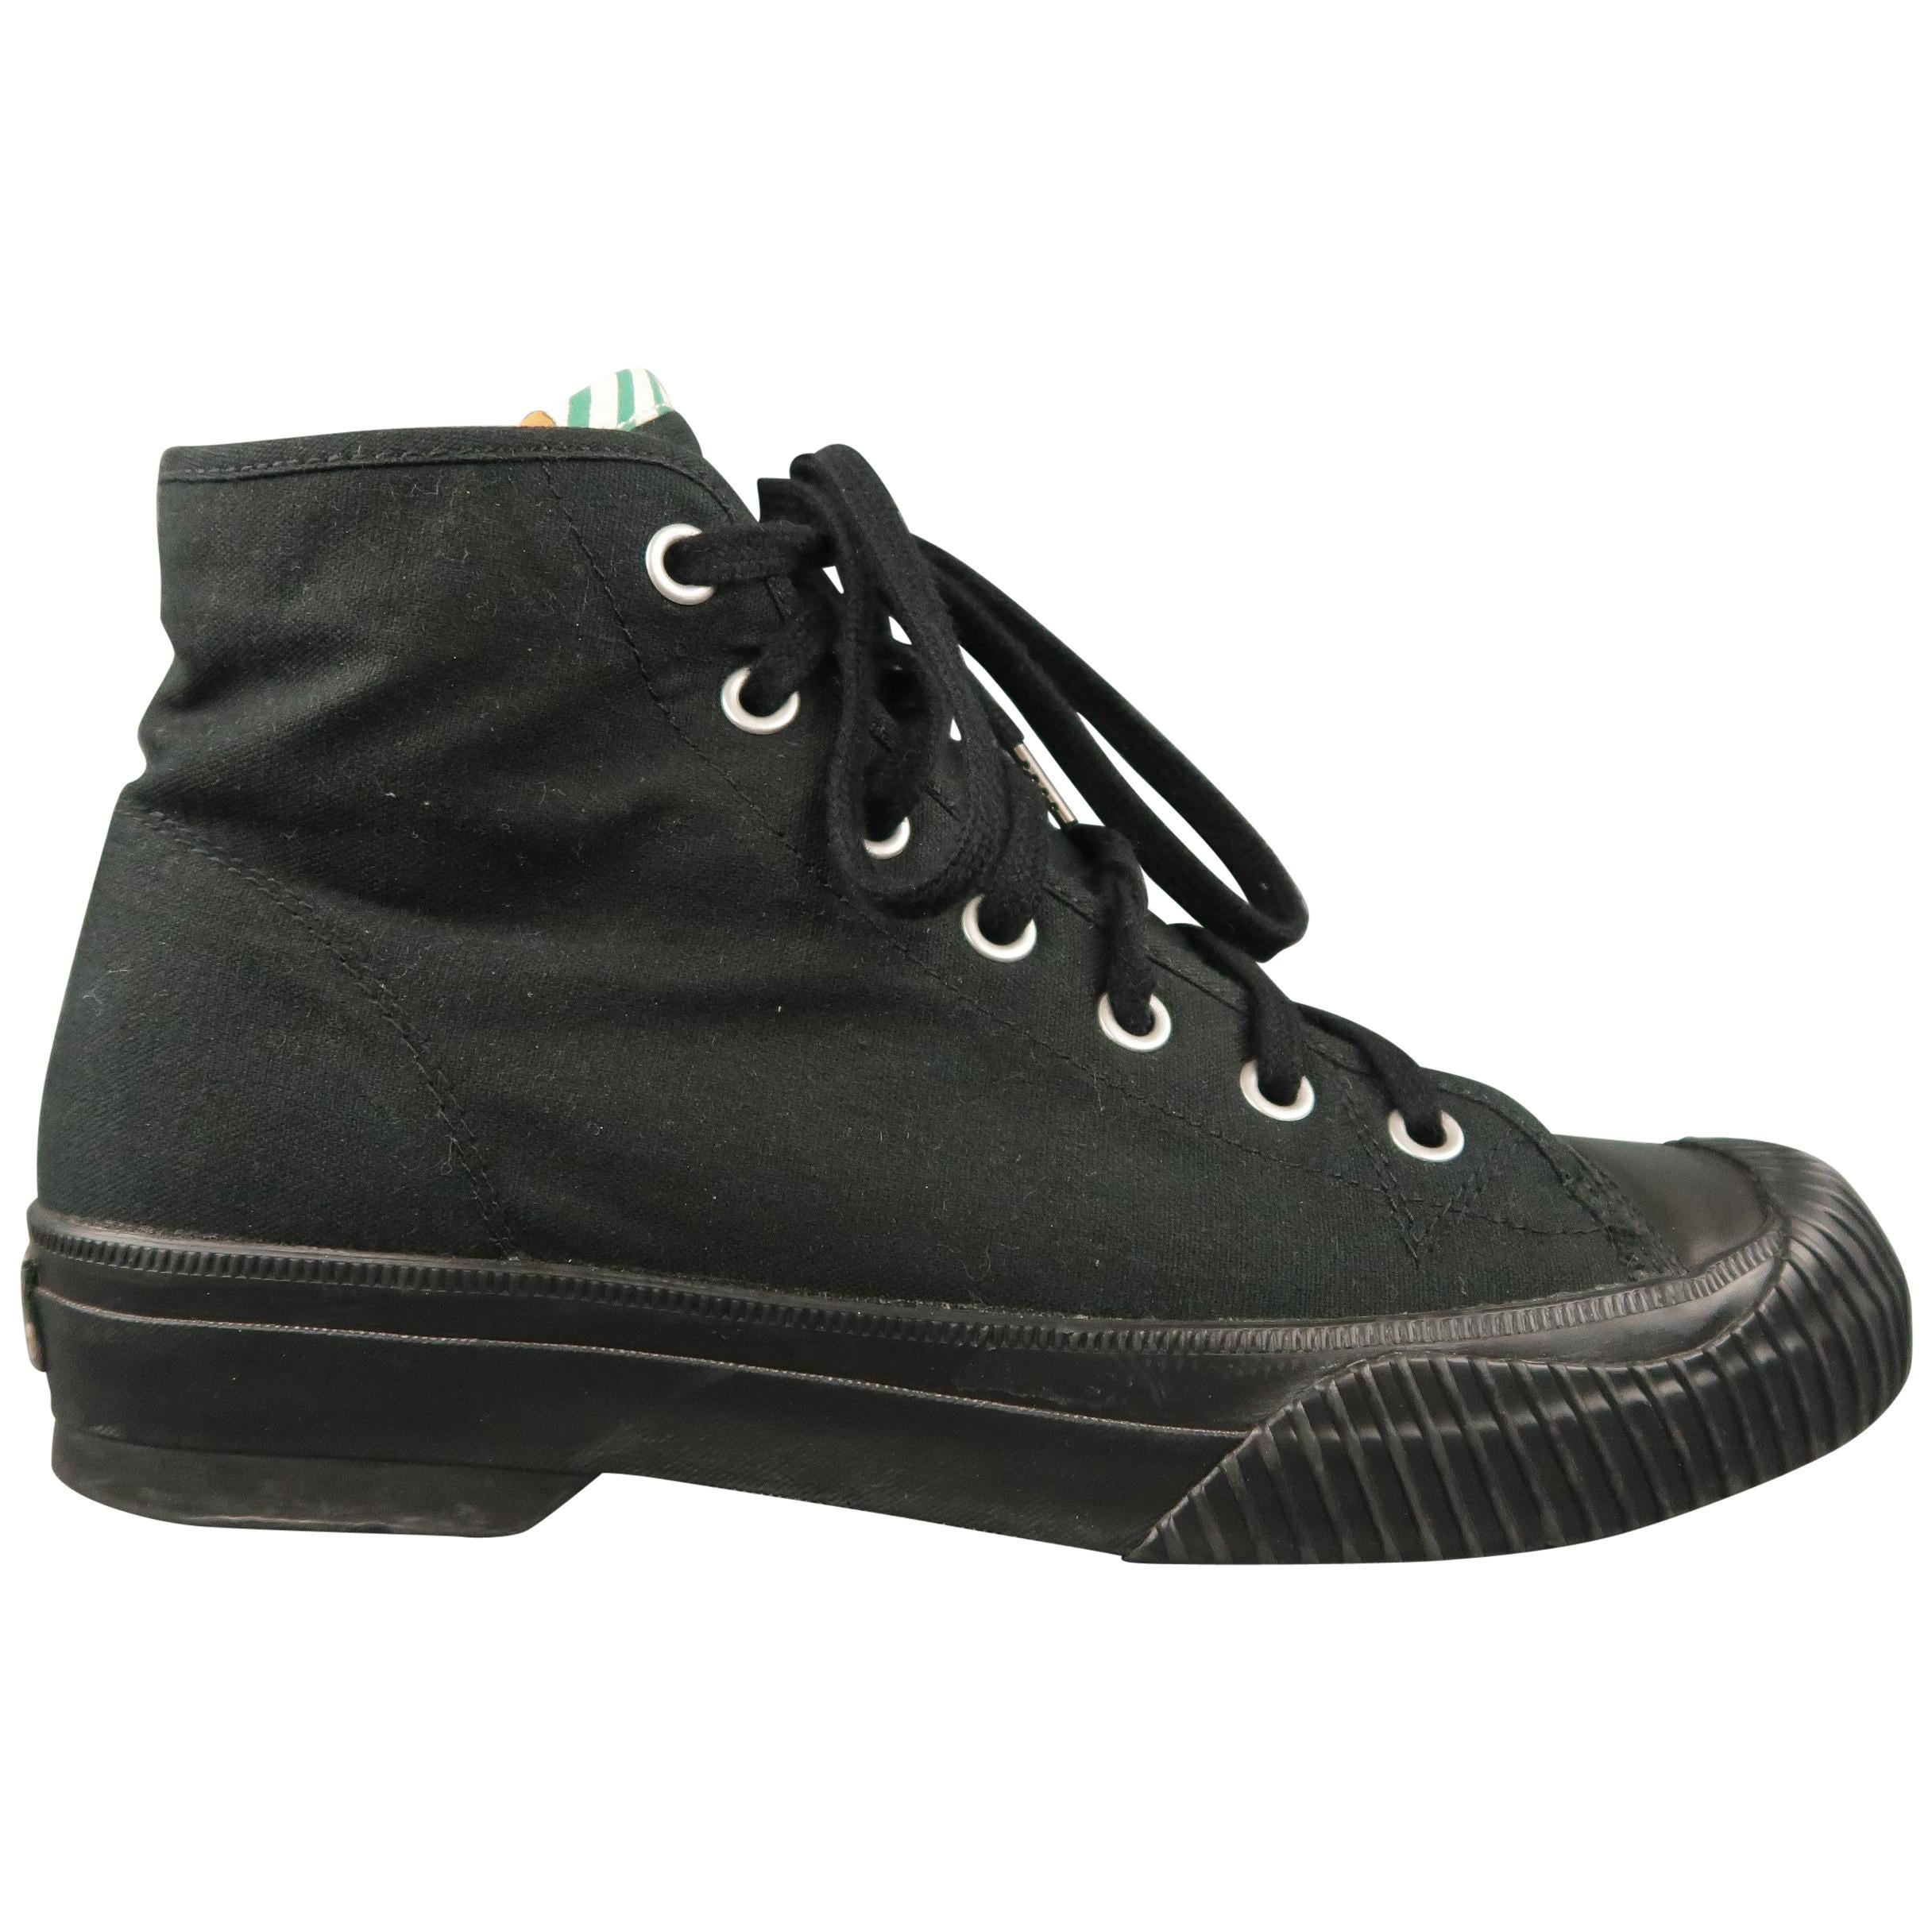 VISVIM Size 10 Black Canvas Rubber Sole Sneaker Boots